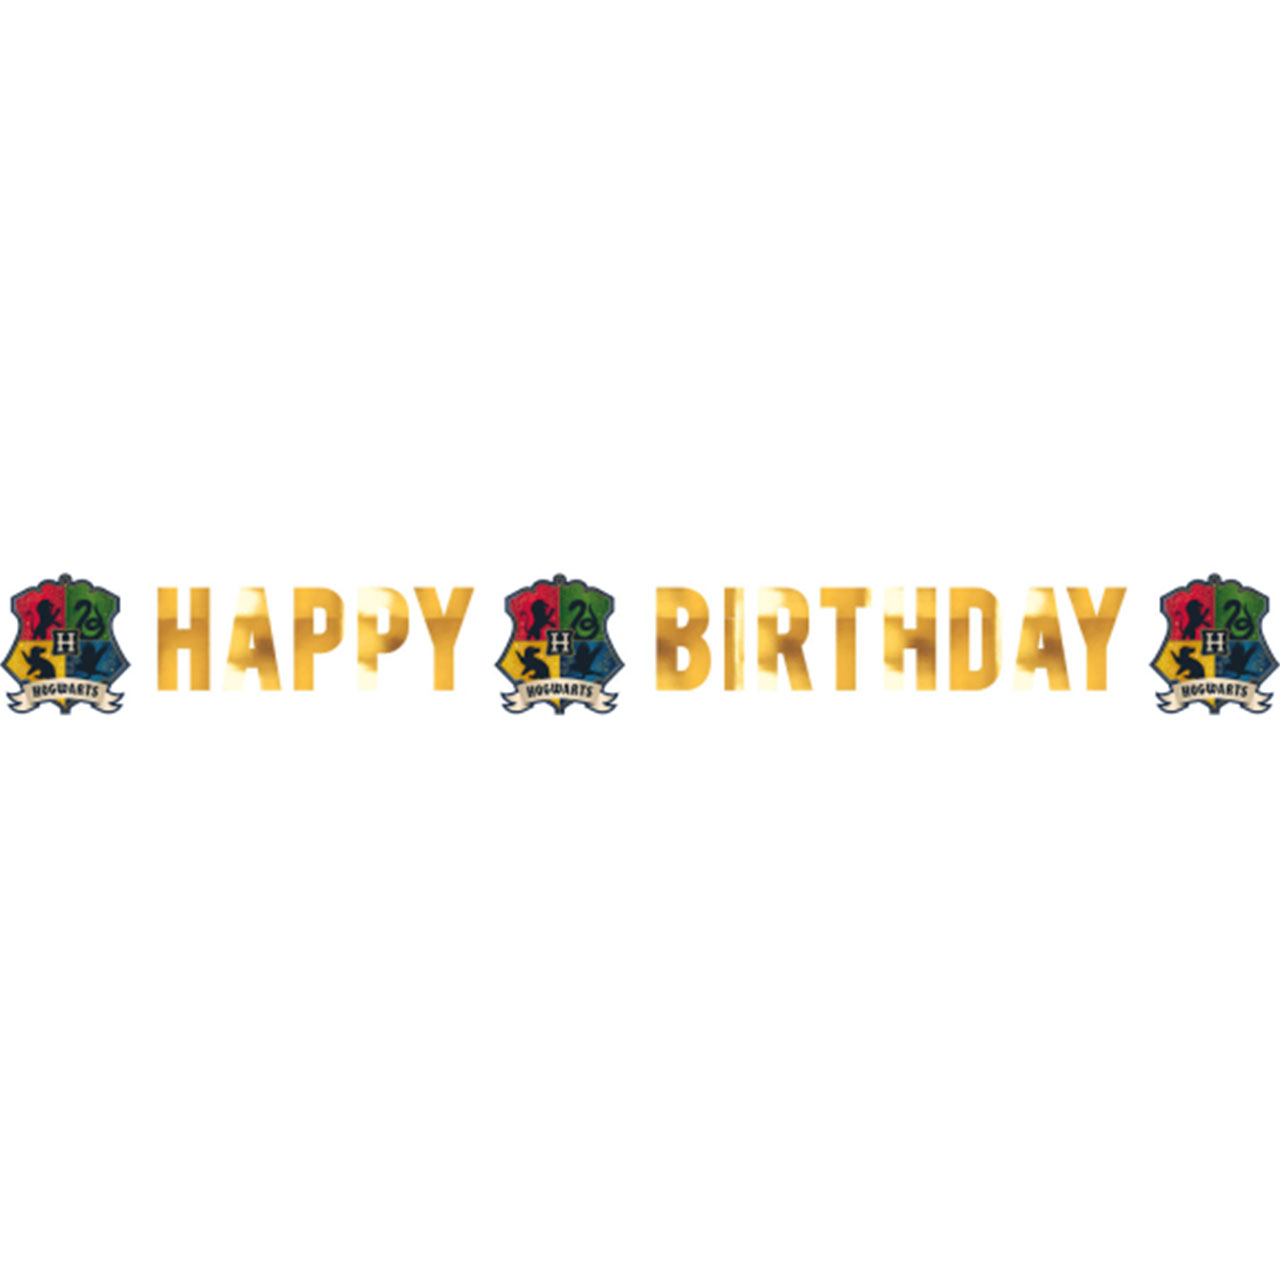 Letter Banner - Happy Birthday Harry Potter